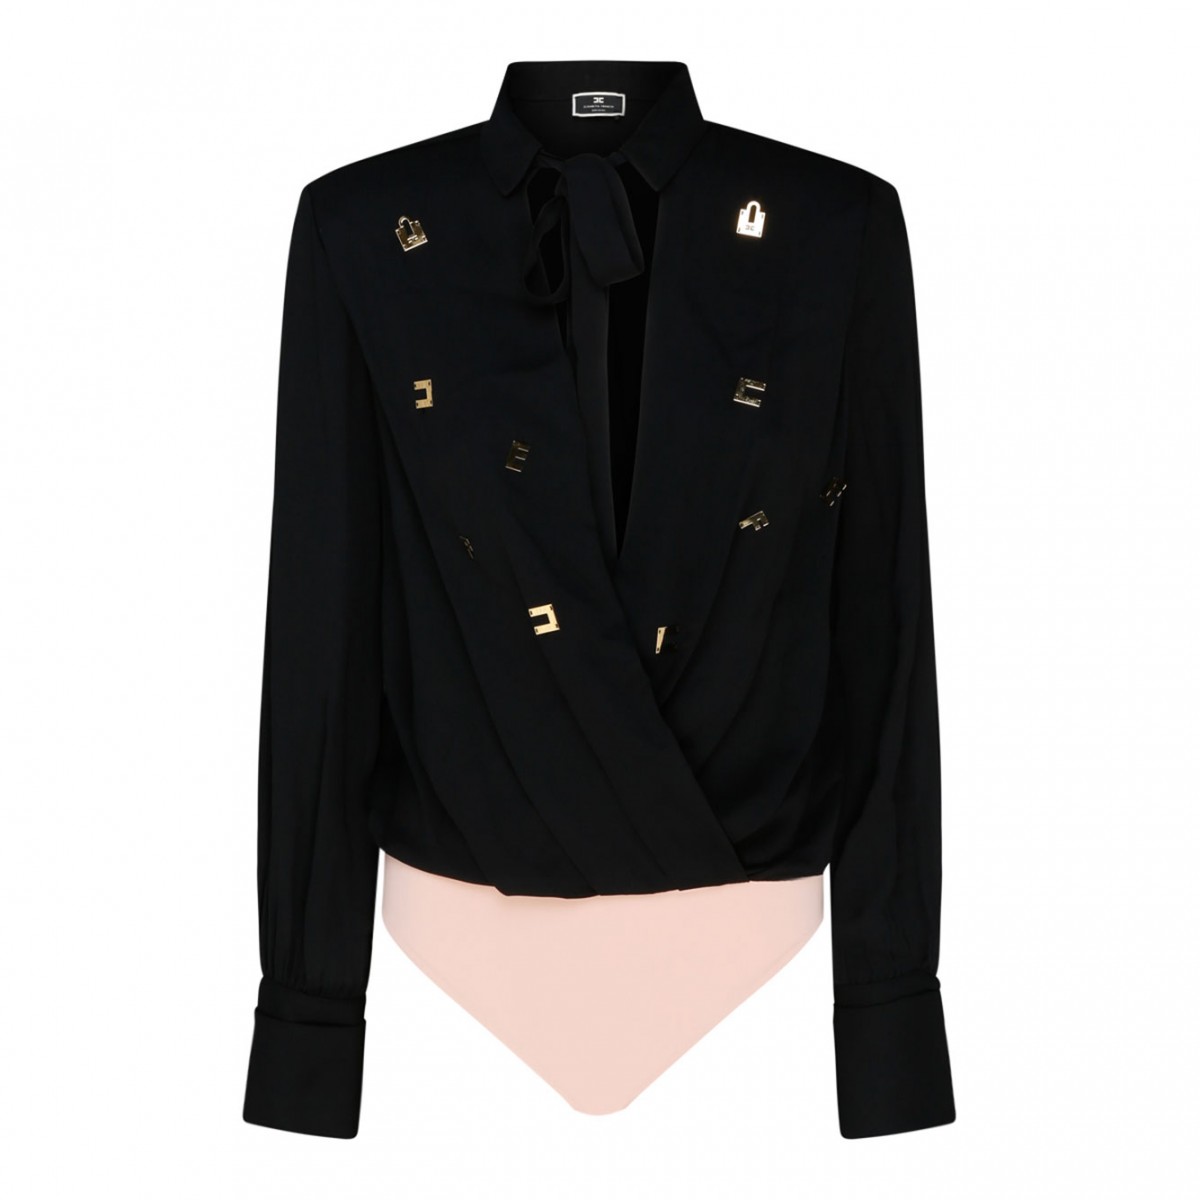 Black and Light Pink Stretch Design Long Sleeve Bodysuit